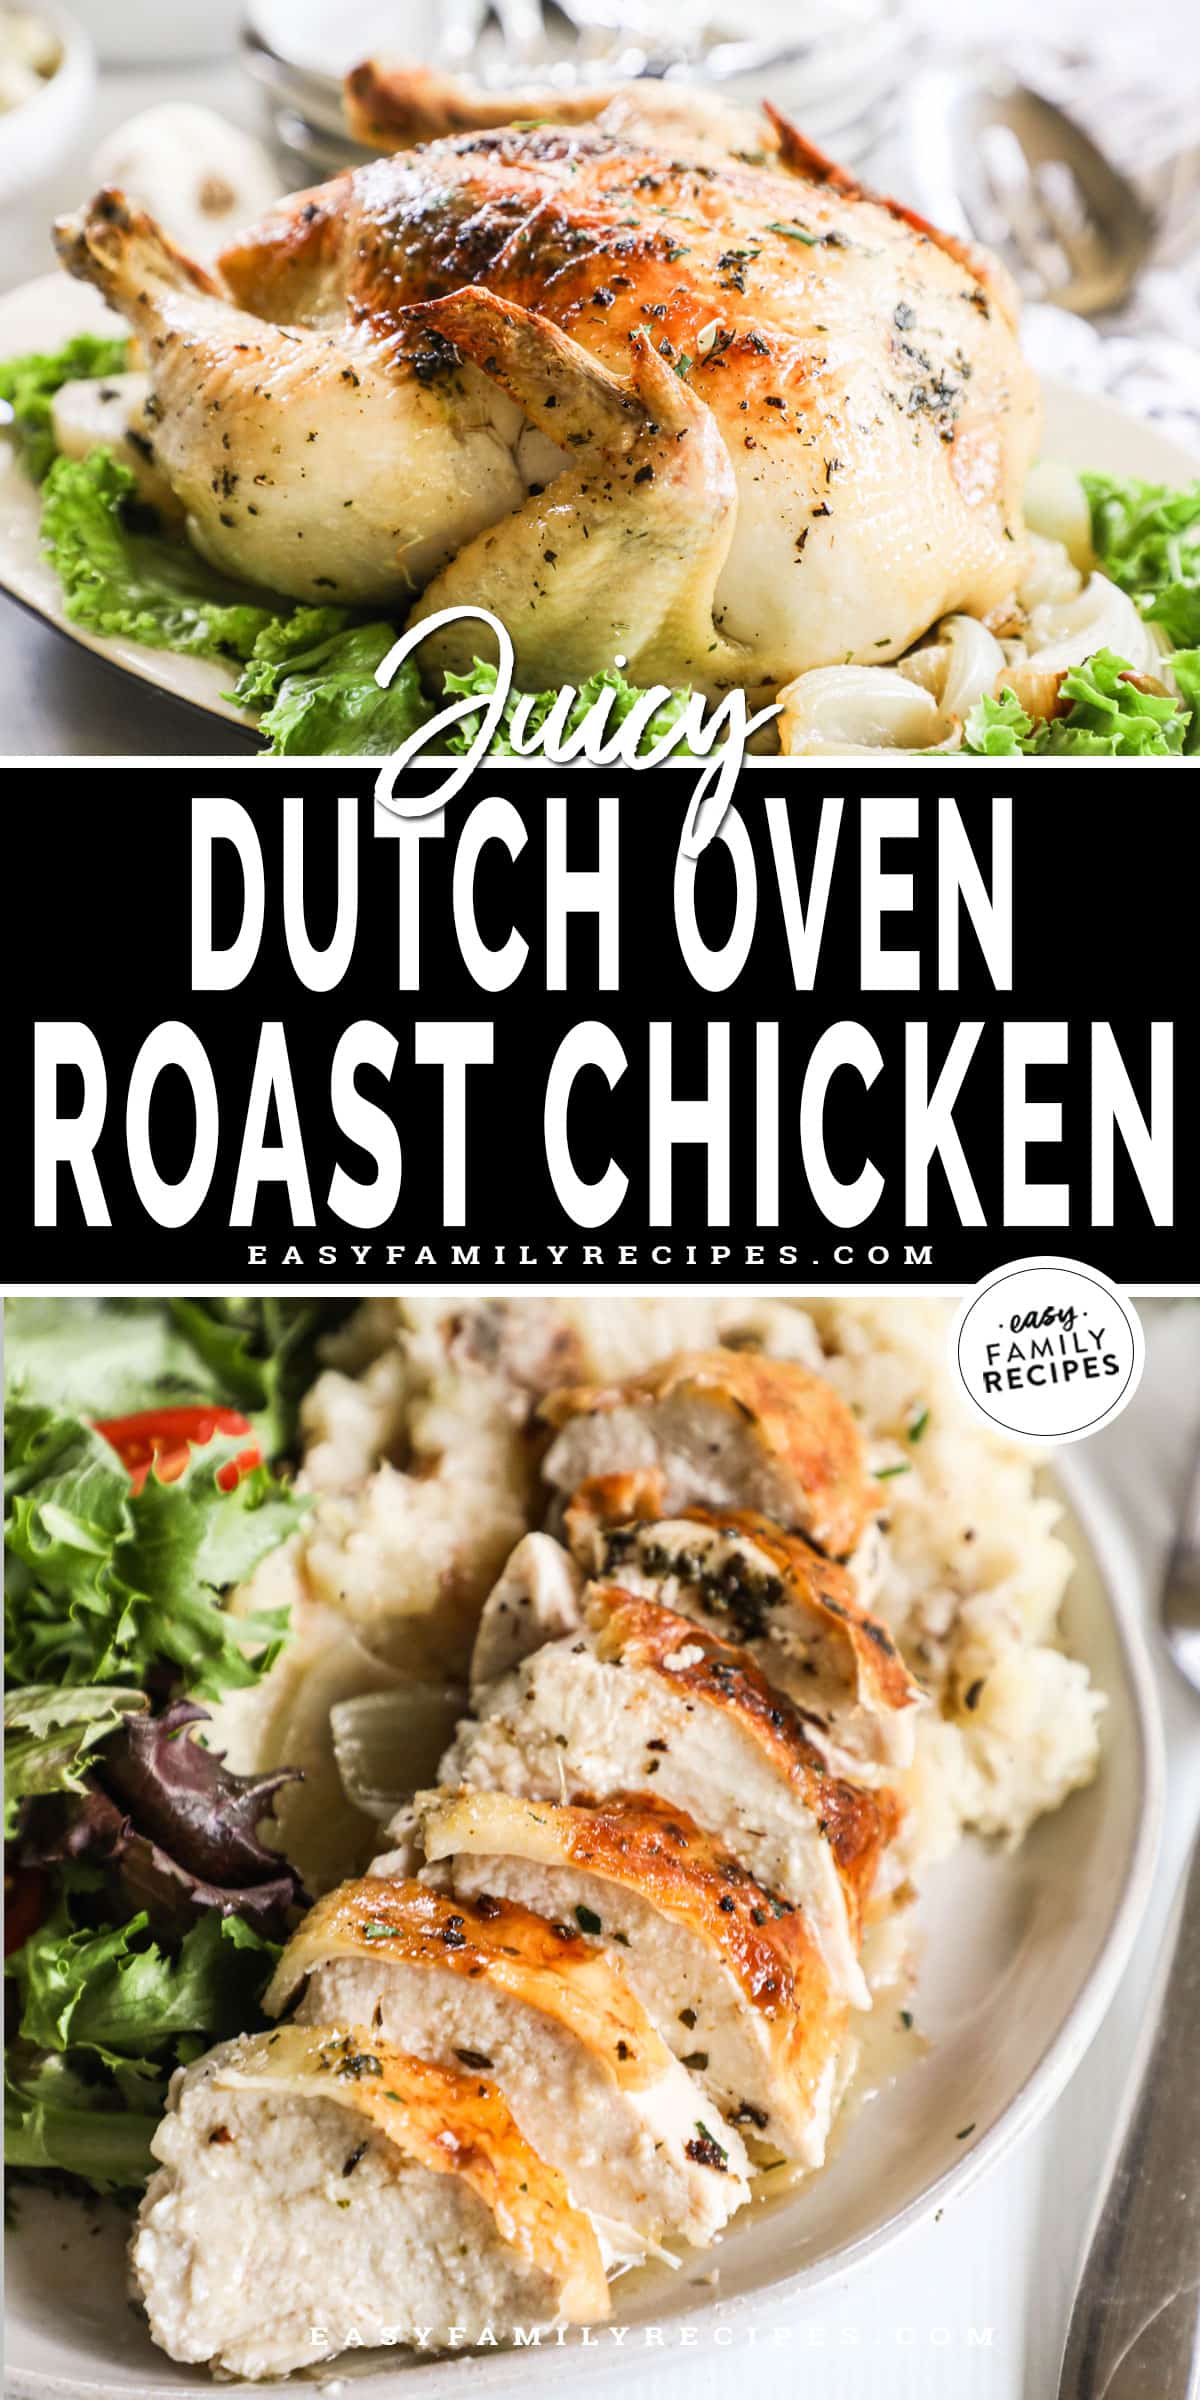 Top photo: whole Dutch oven roast chicken, bottom photo: sliced Dutch oven chicken